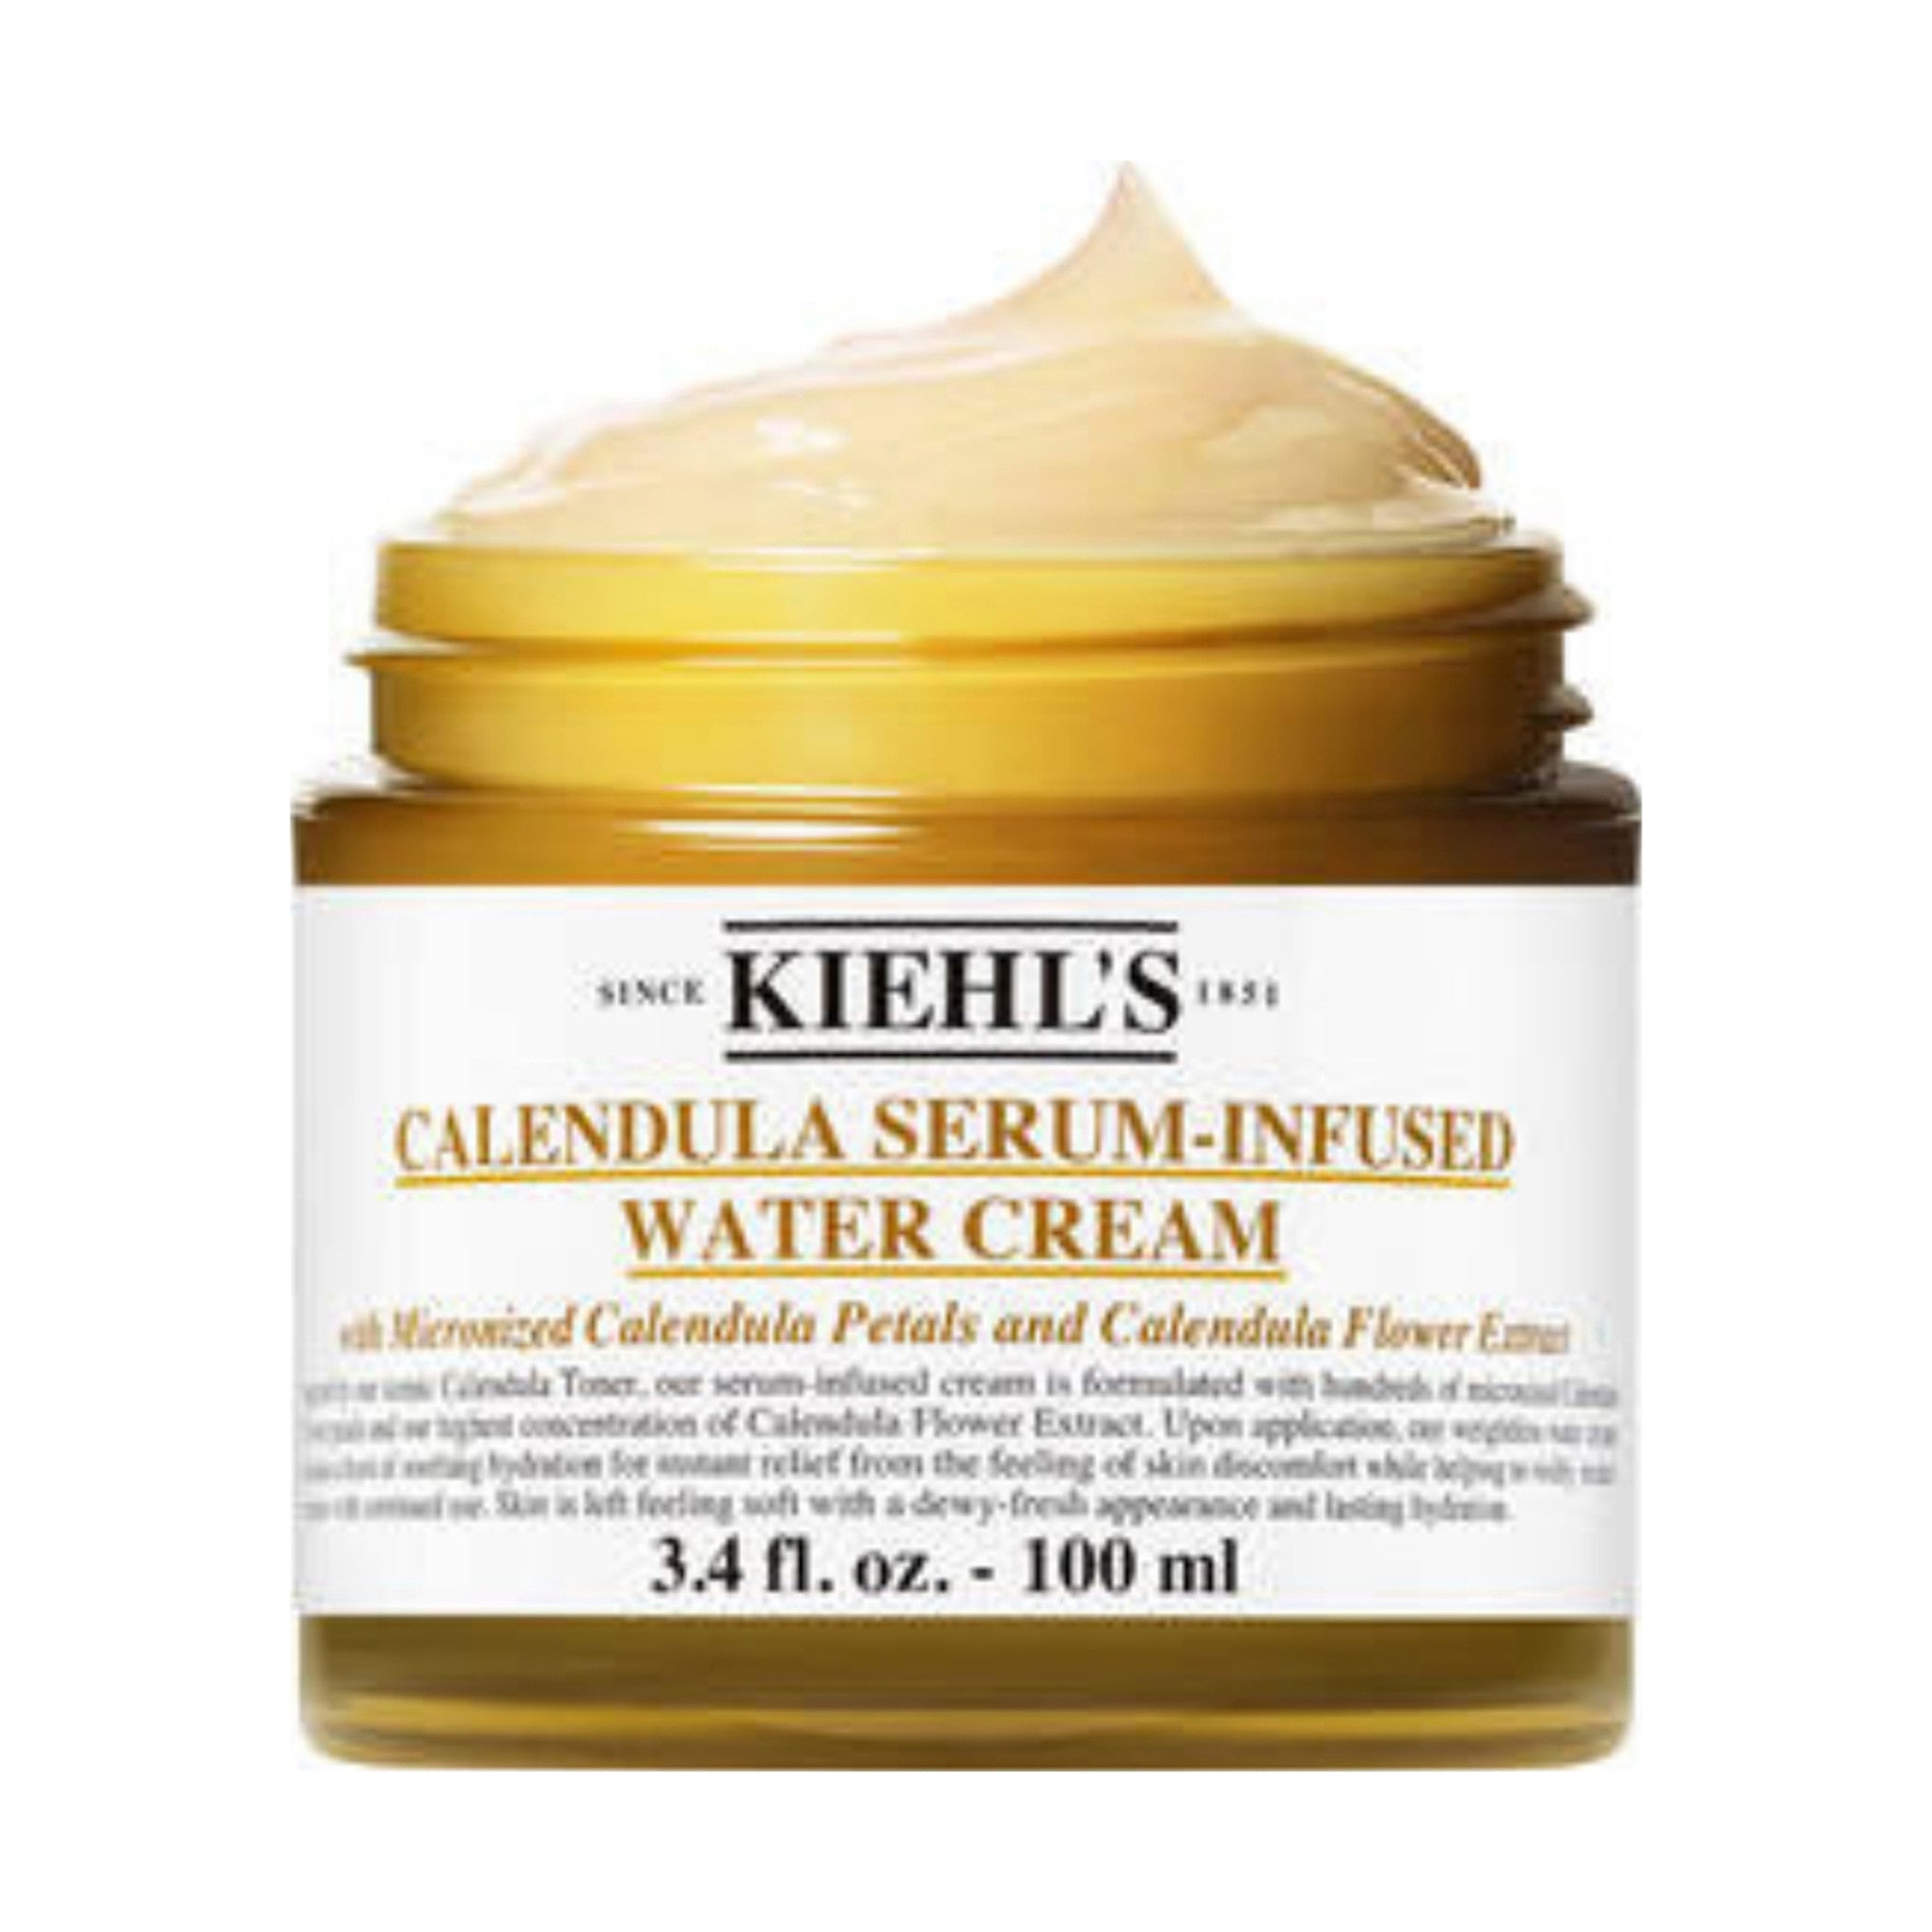 Kiehl's Since 1851 Calendula Serum-Infused Water Cream Size variant: 3.4 fl oz | 100 ml main image.